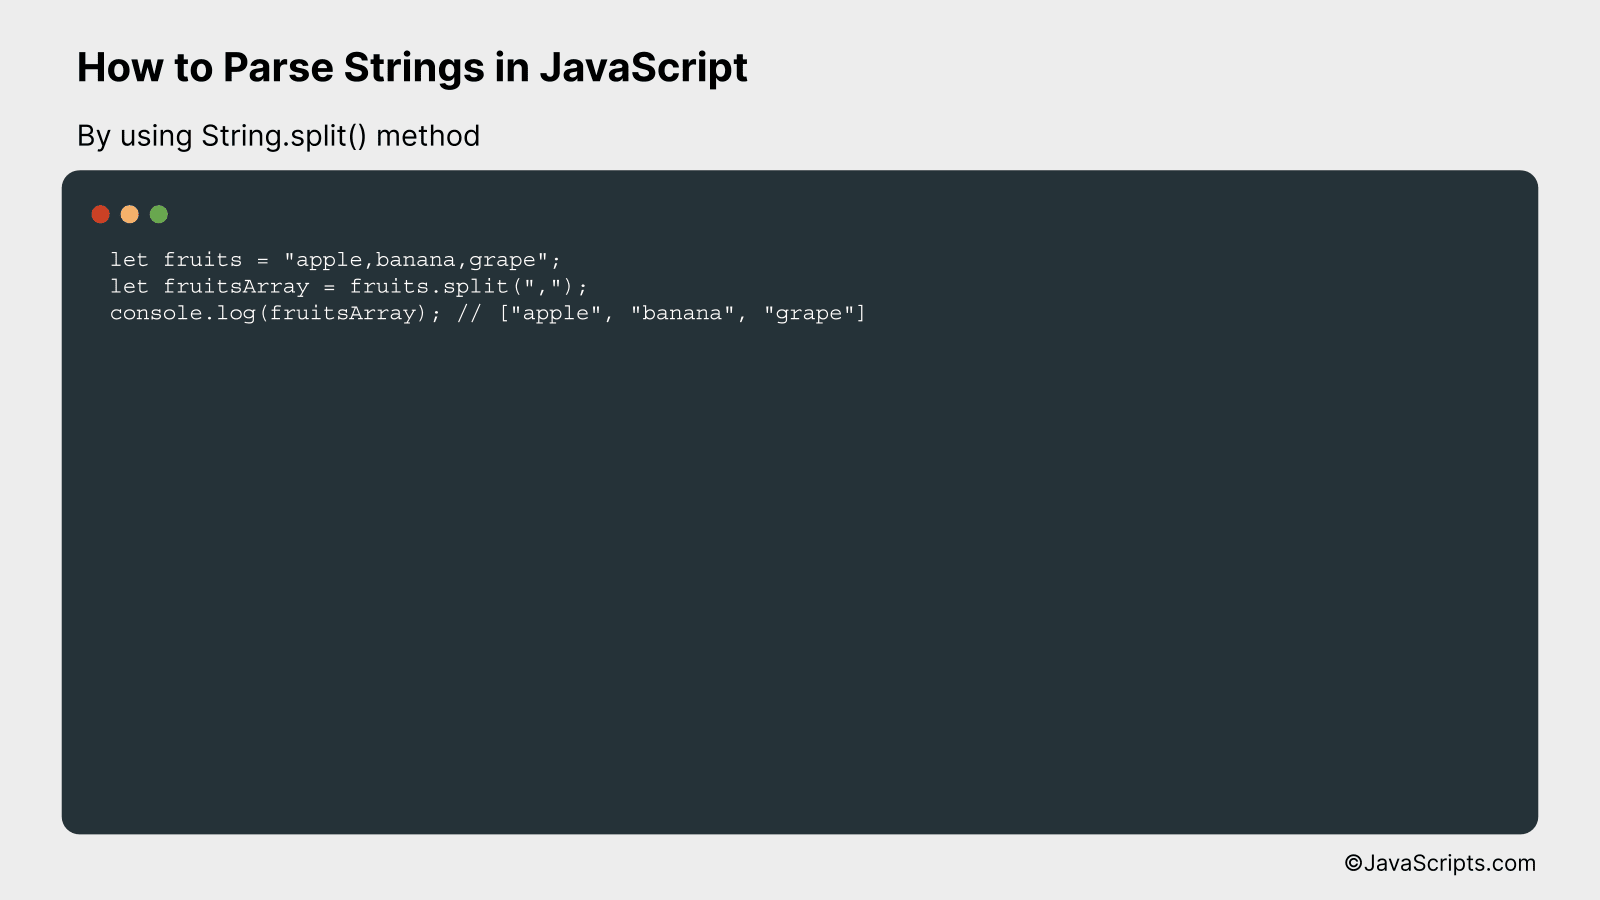 By using String.split() method